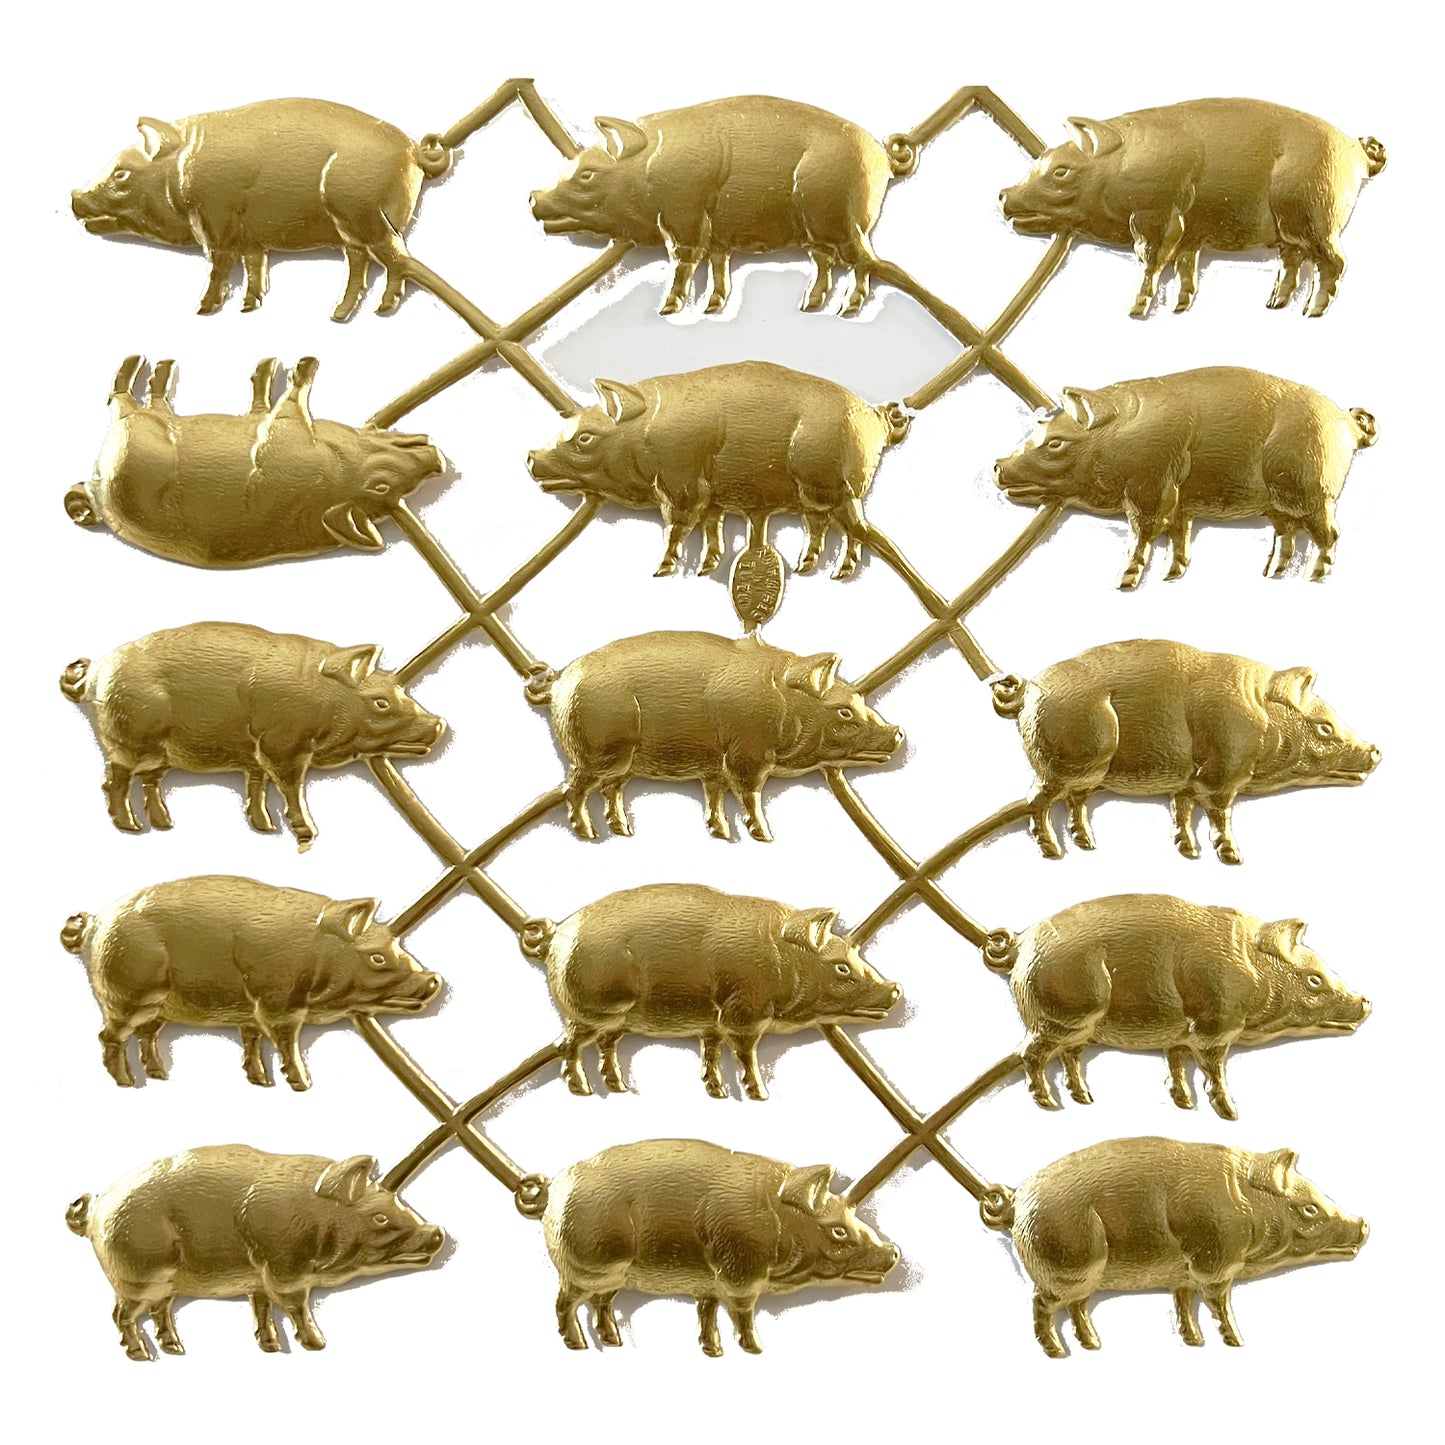 Pigs - set of 15